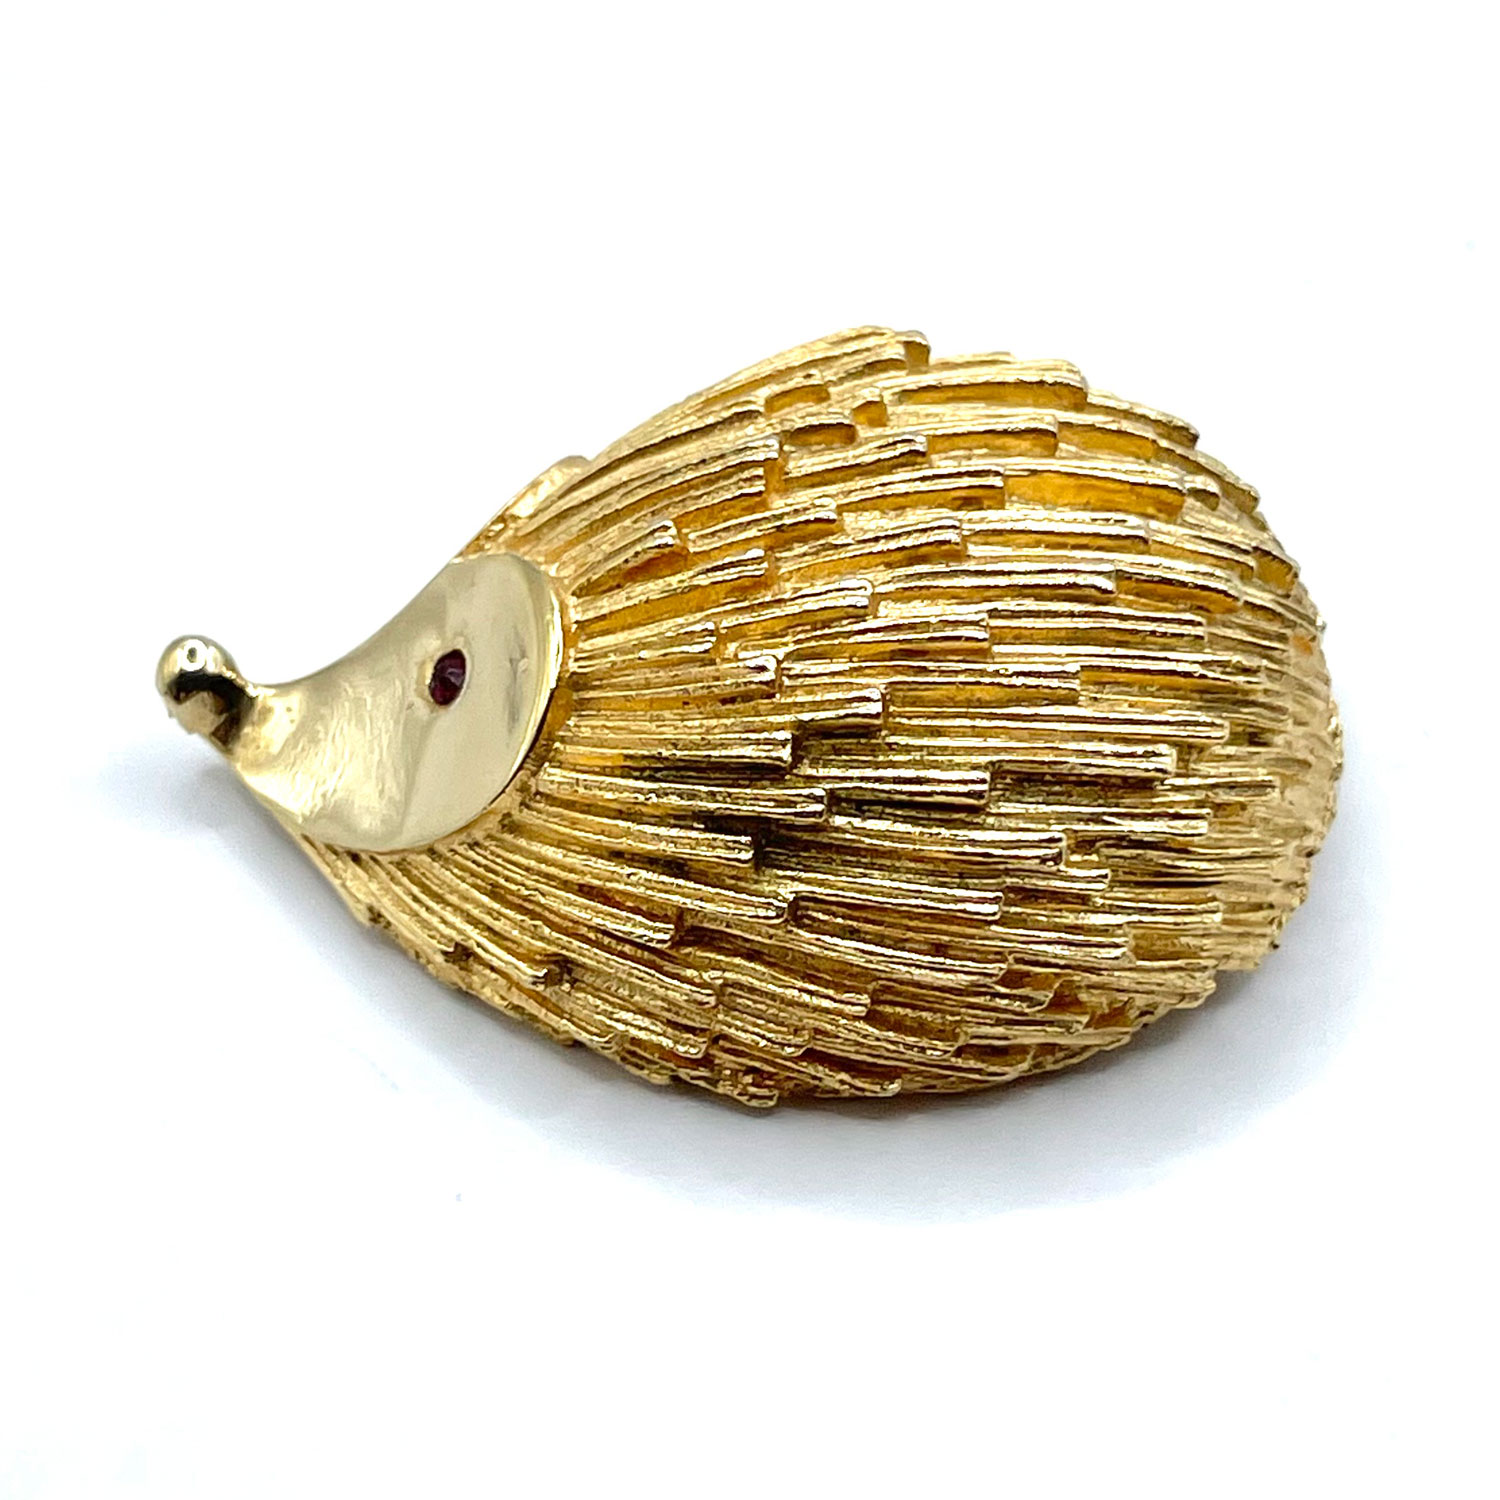 Hedgehog brooch by Sarah Coventry